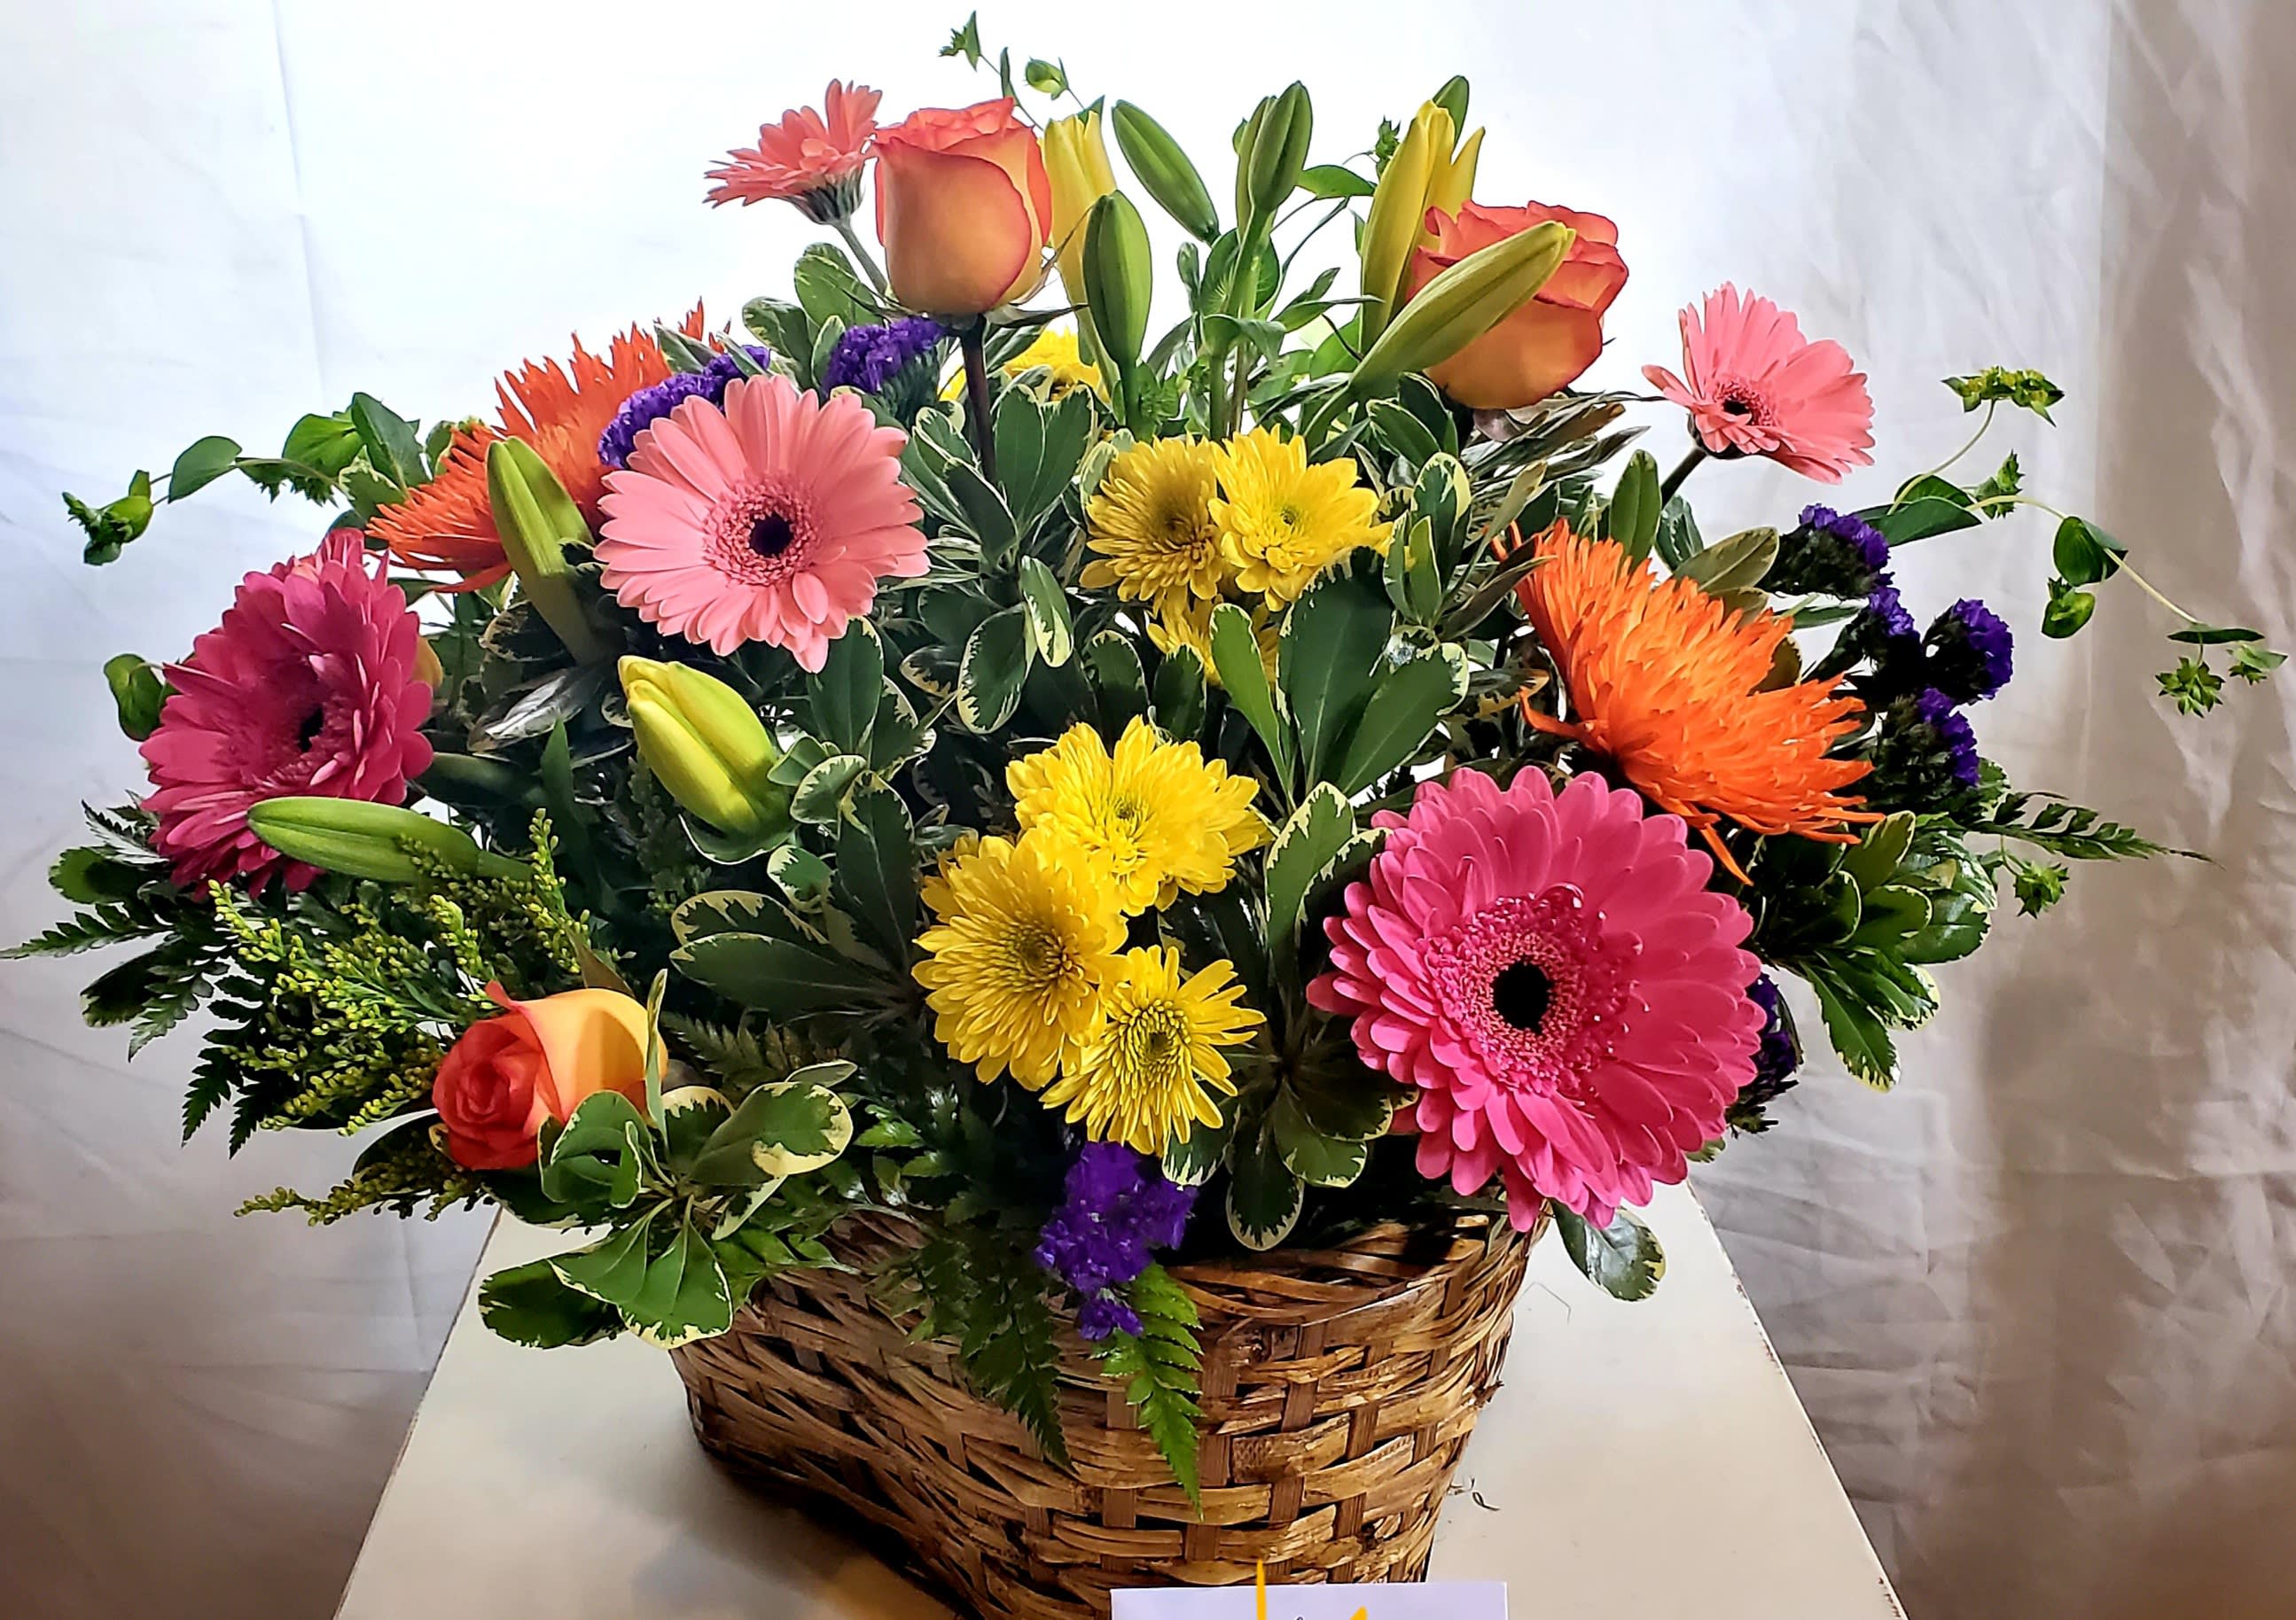 Bright Beauty - An elegant bright basket for any occasion.  Enjoy seasonal blooms in a delightful wicker basket.